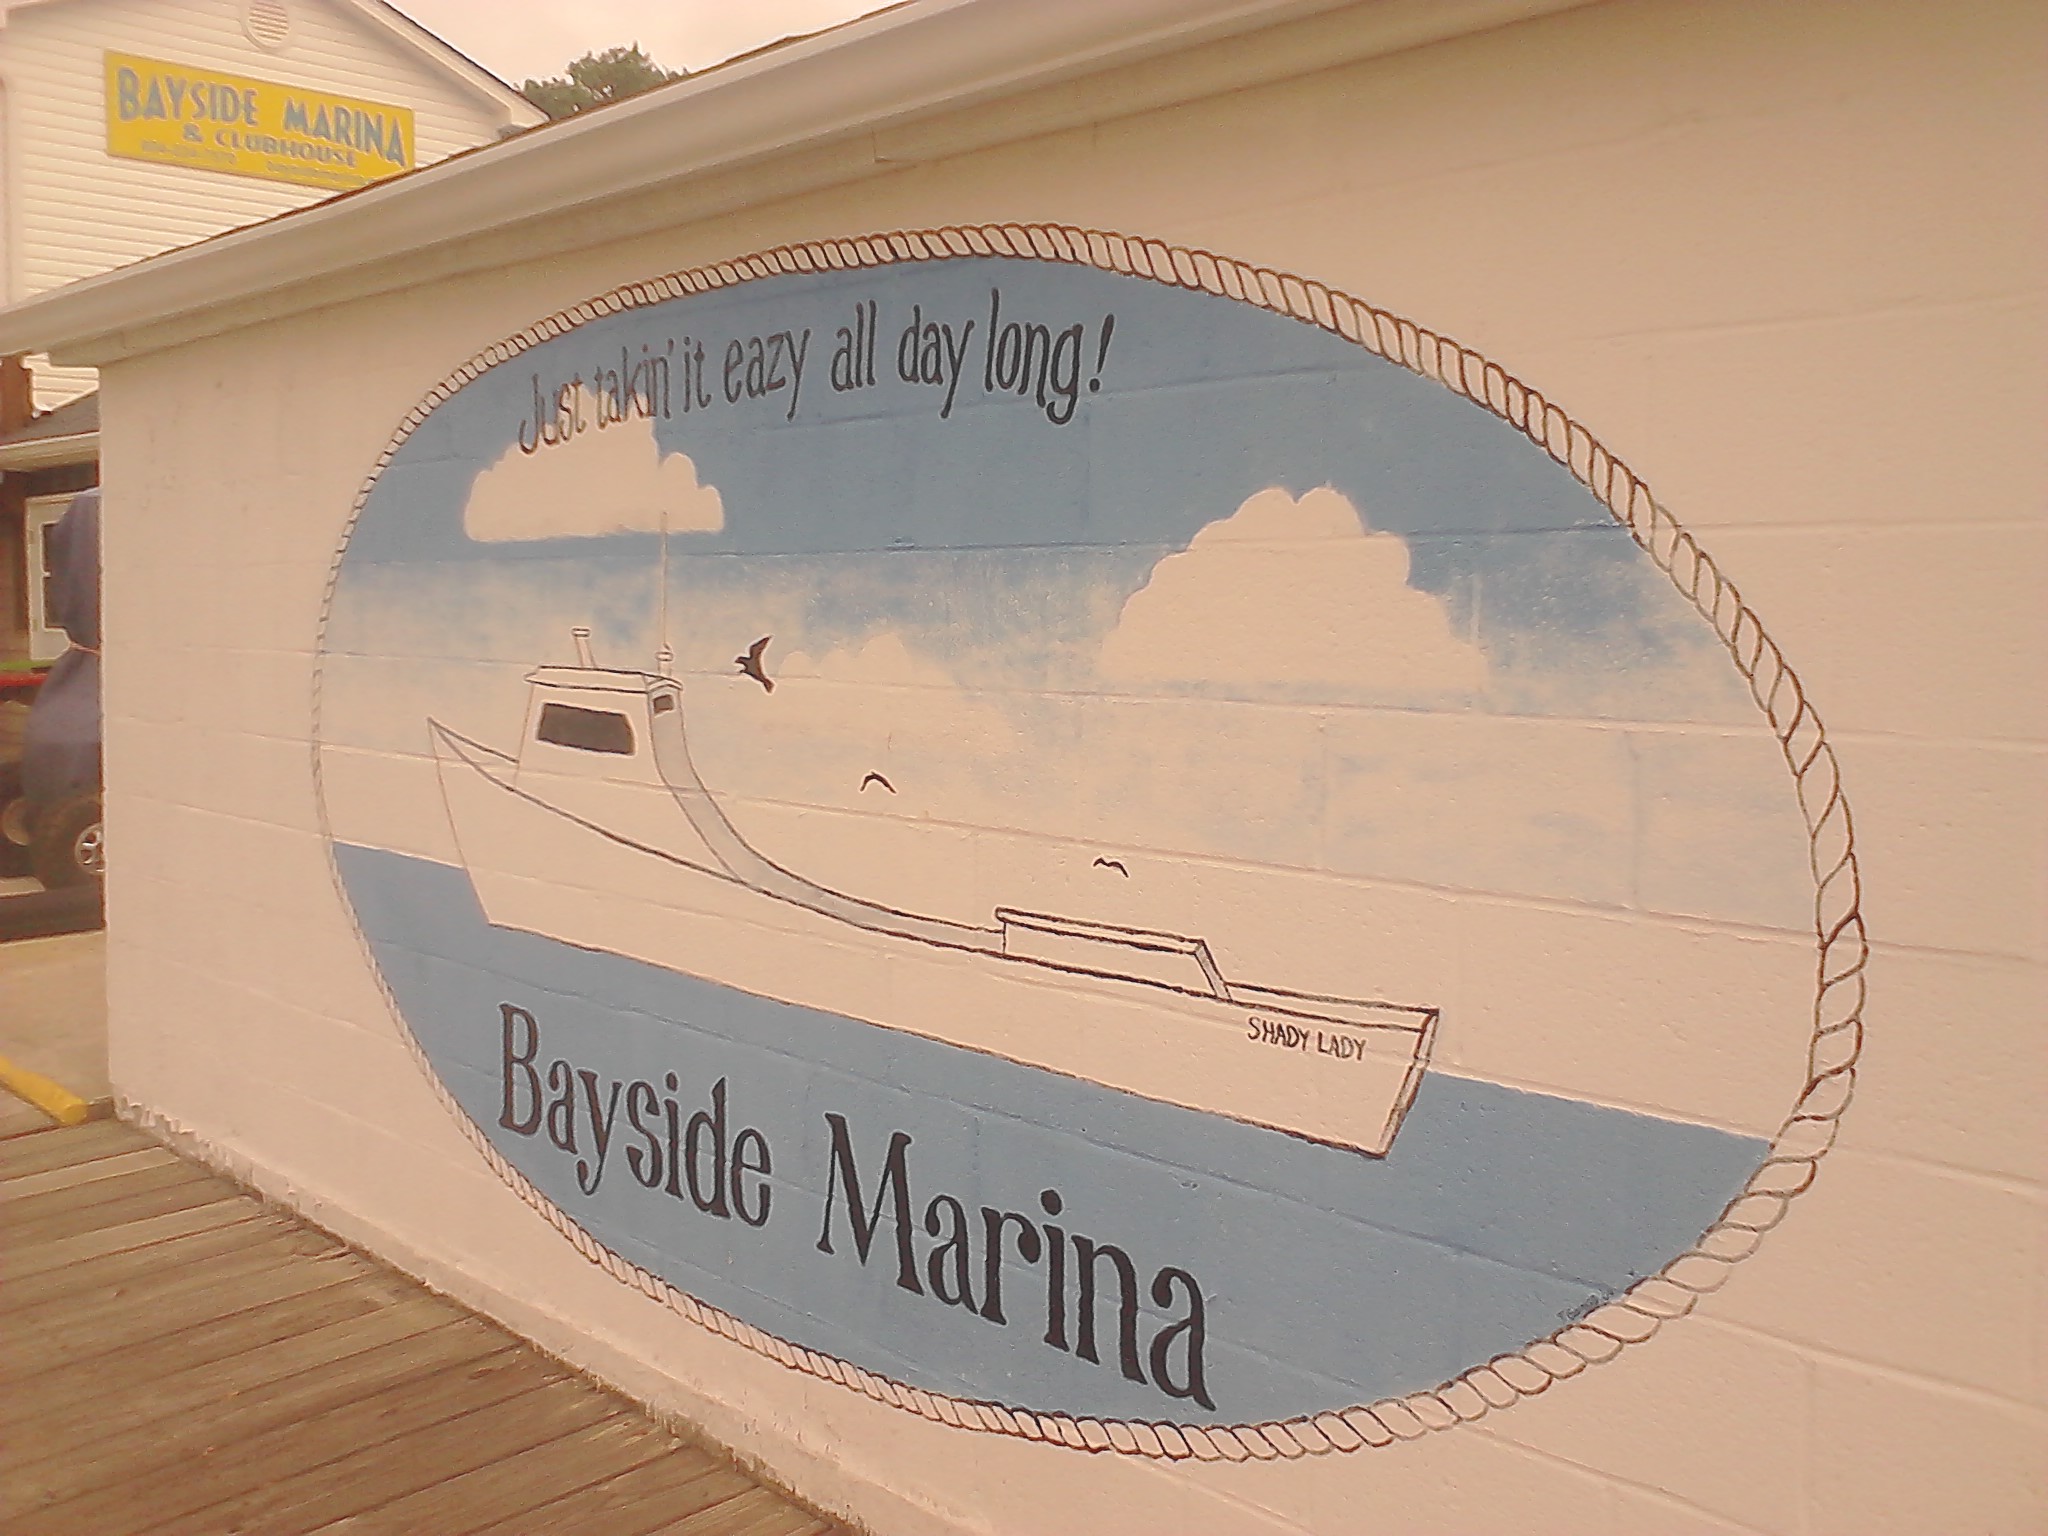 Bayside Marina